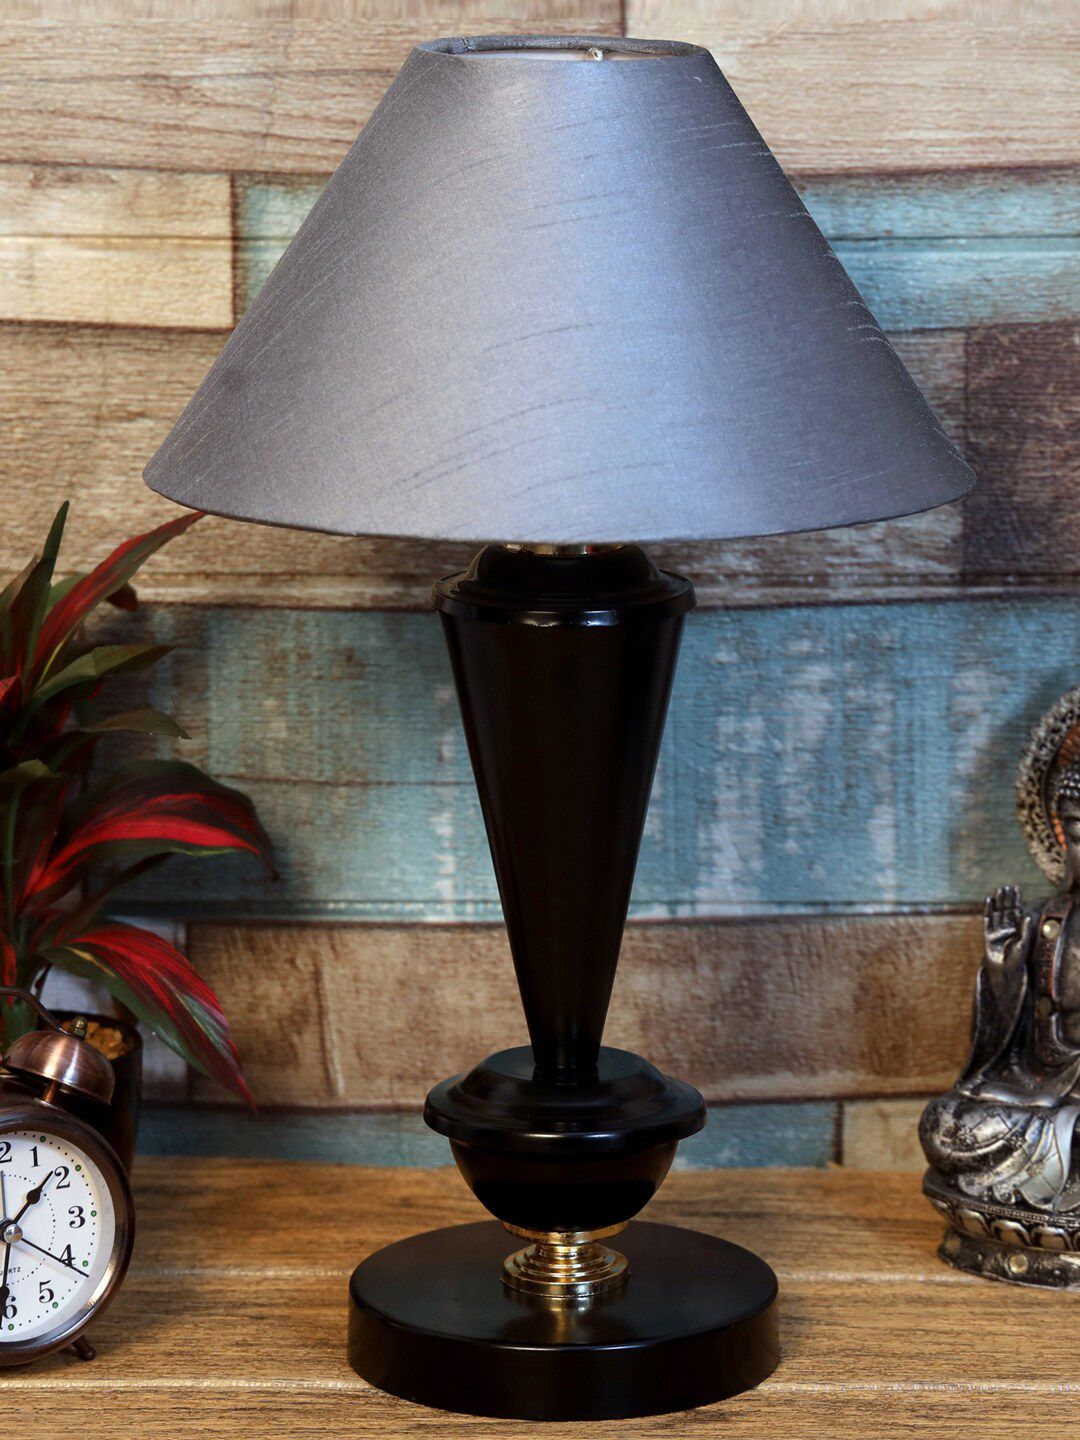 foziq Black & Grey Textured Triangle Table Lamp Price in India